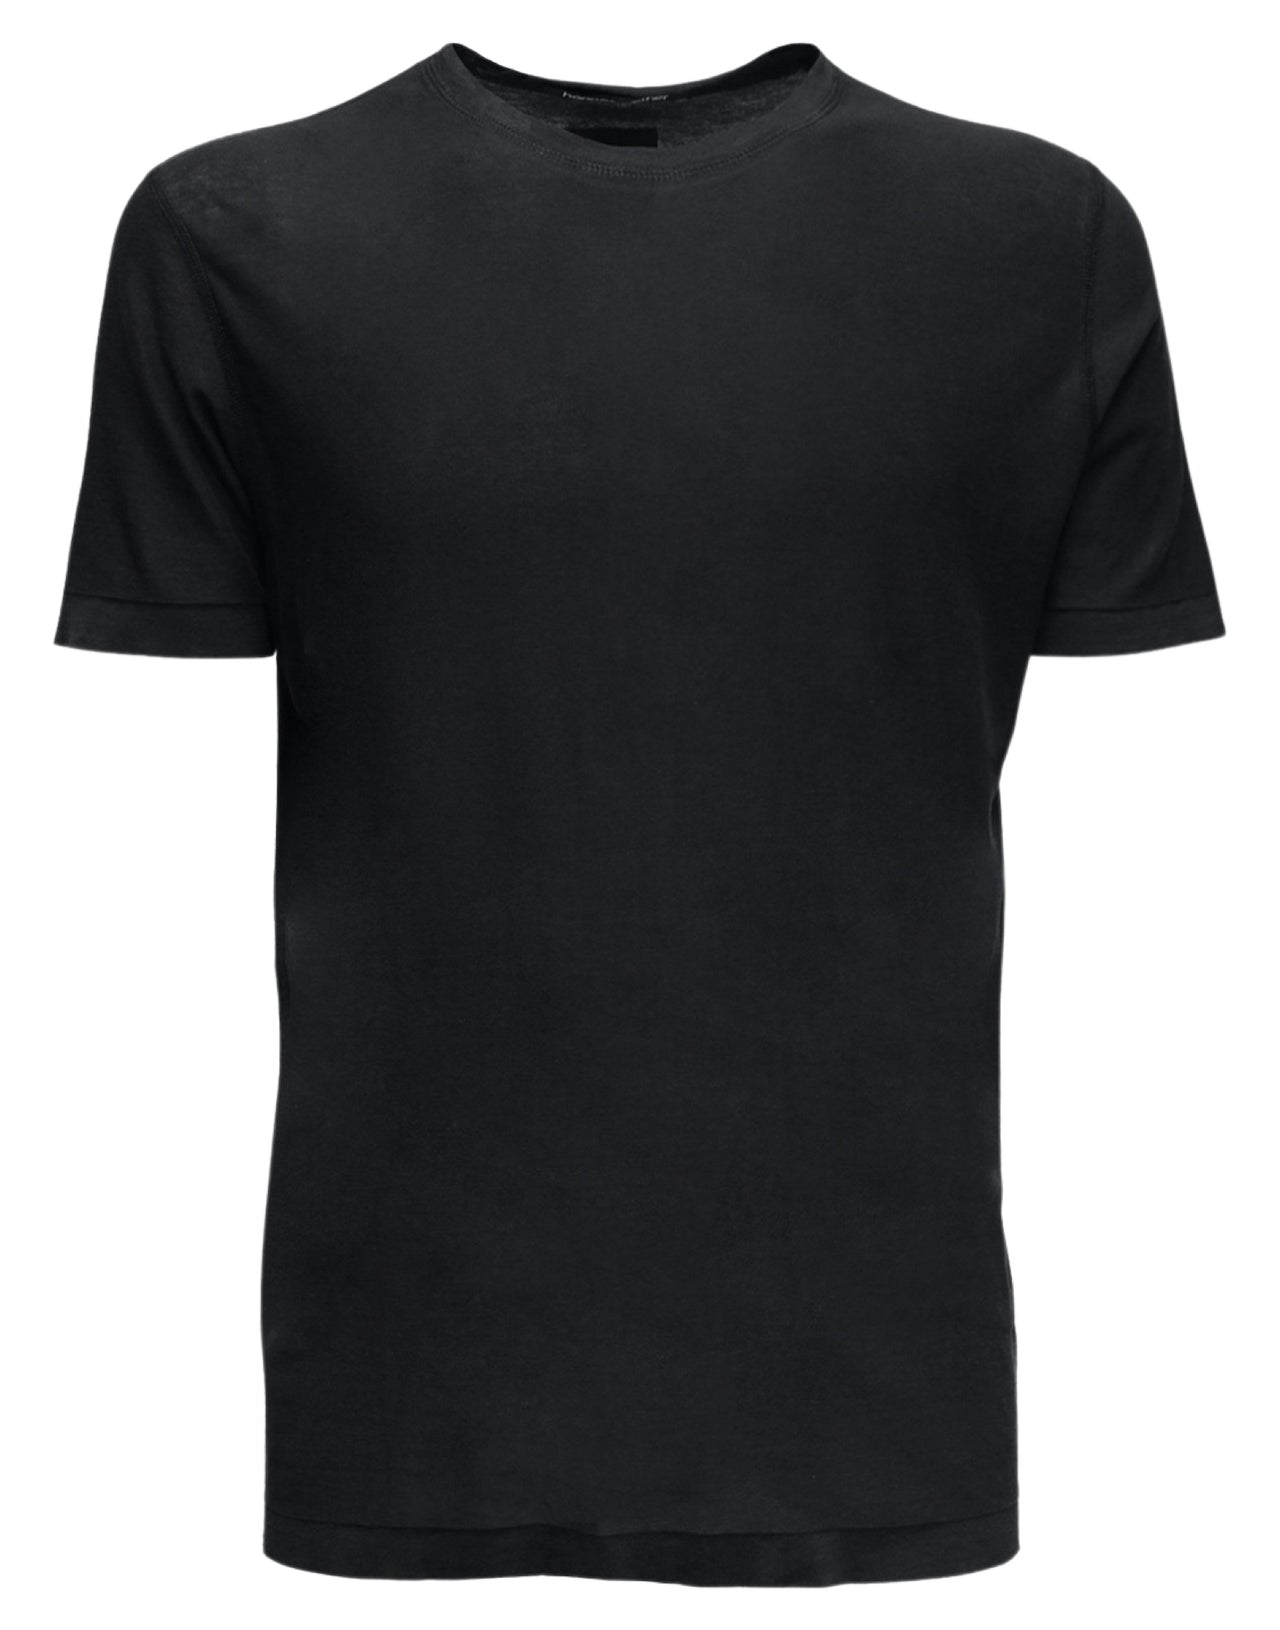 HANNES ROETHER T-shirt Filo Scozia Nera